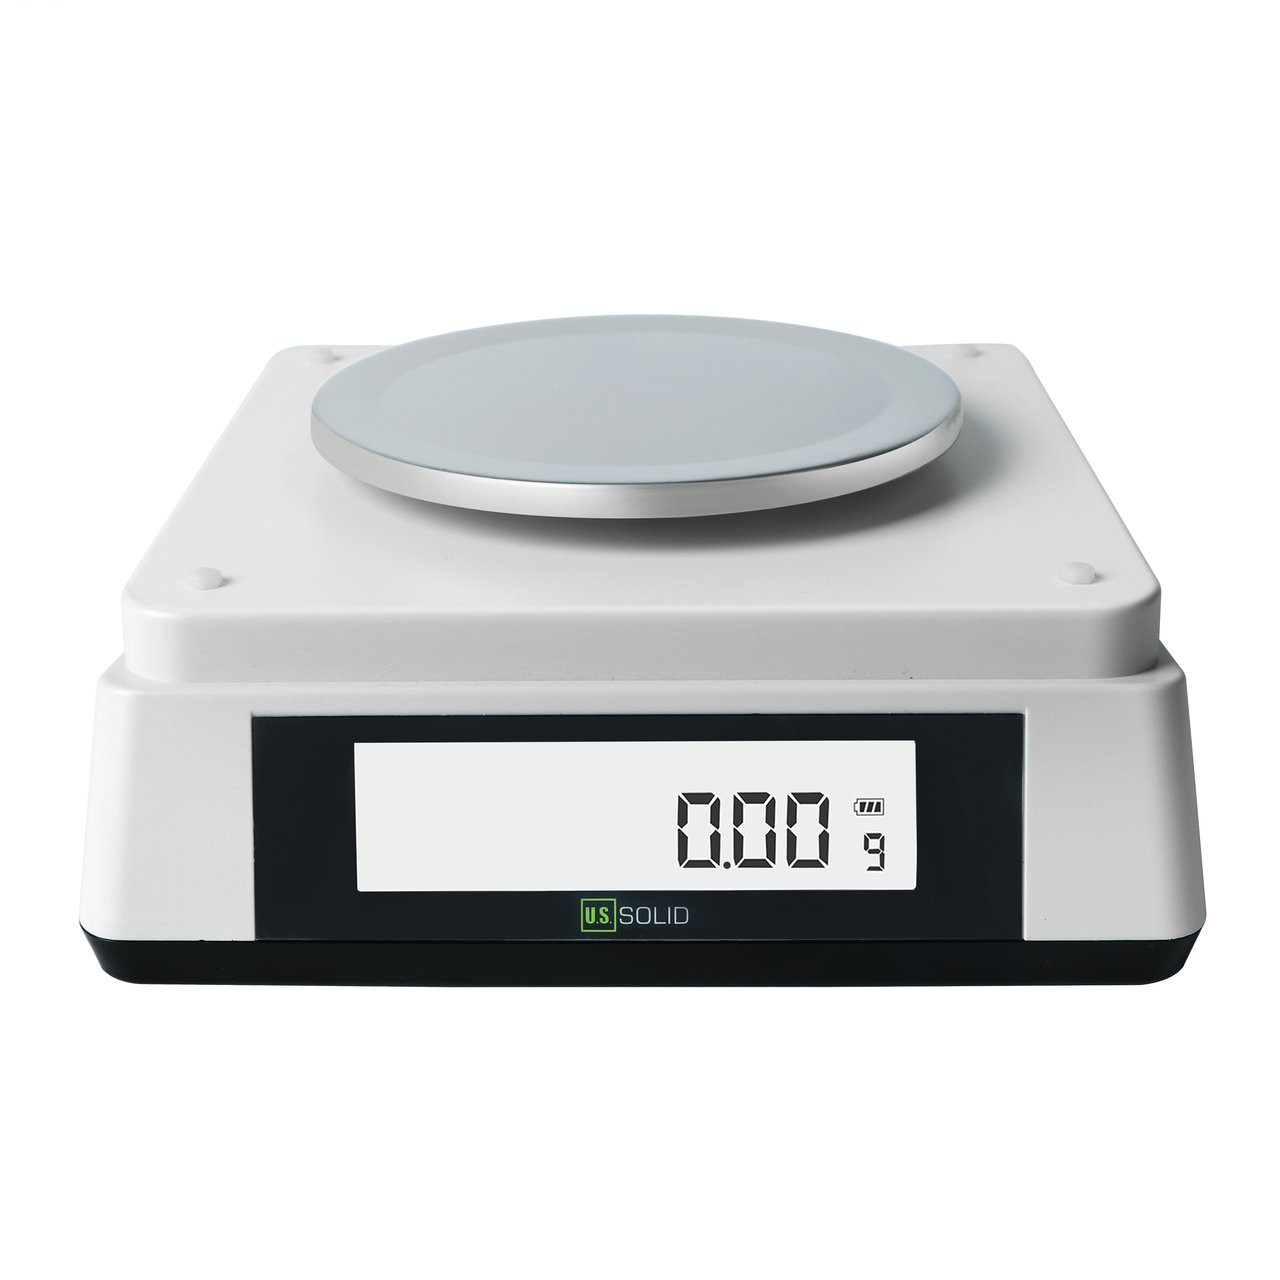 U.S. Solid 0.01 G Precision Balance – 2 kg Digital Analytical Lab Electronic 10 mg Scale, 2100 G x 0.01g